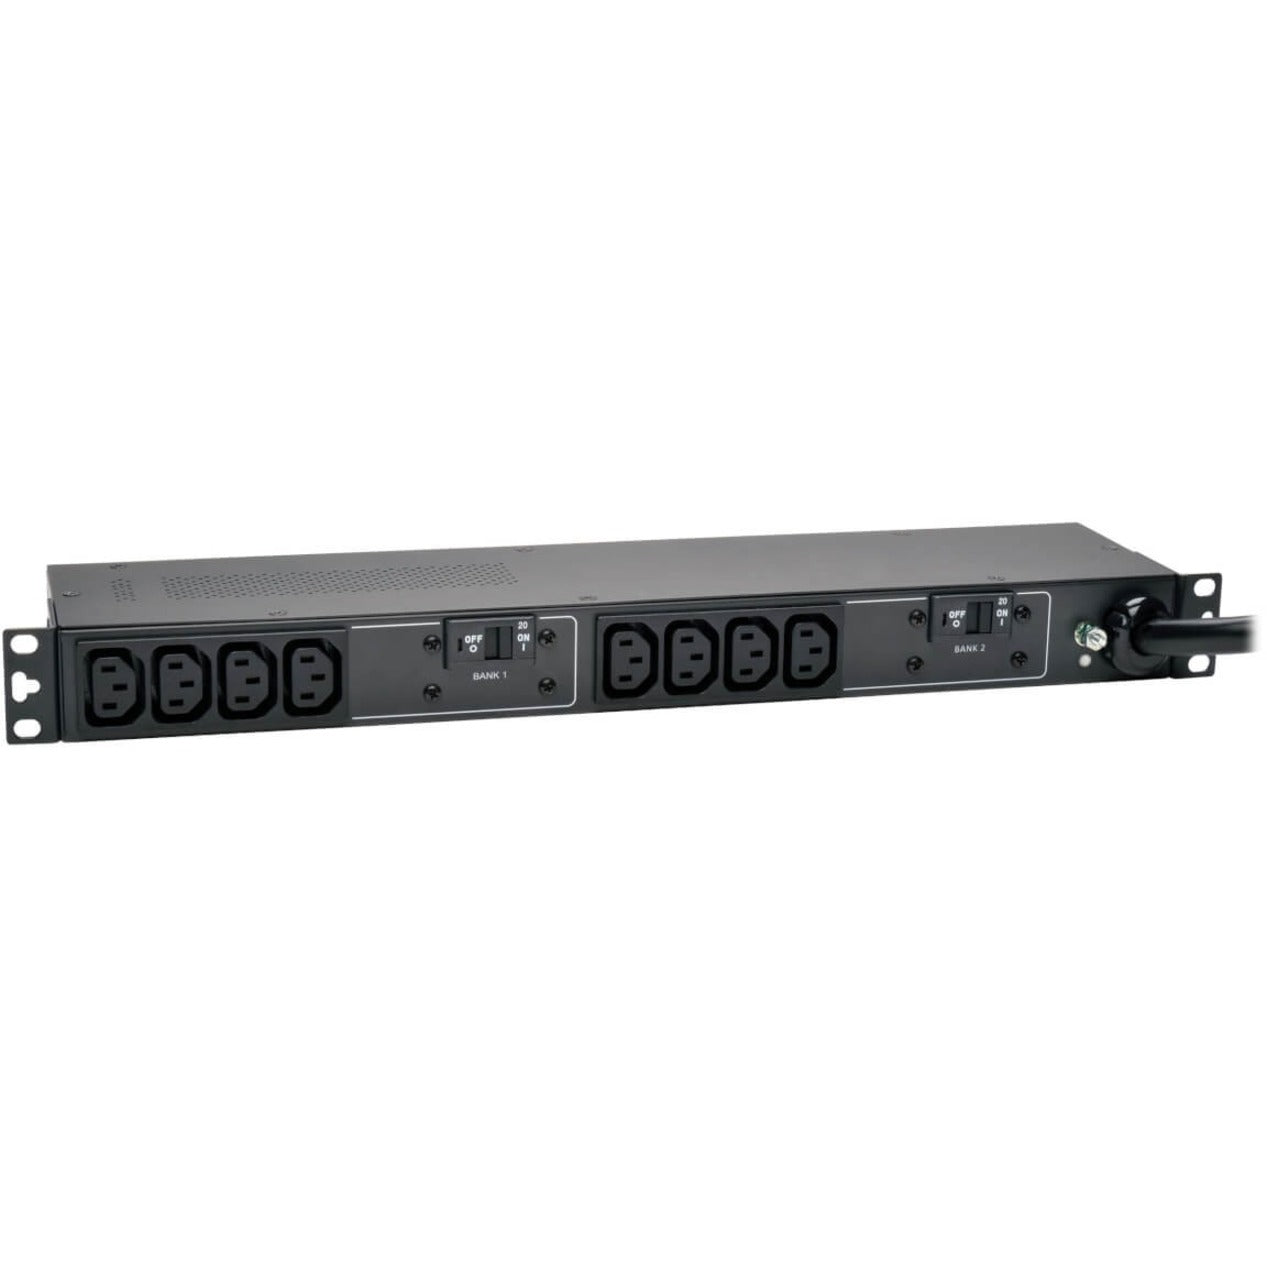 Tripp Lite PDUH30HV Basic PDU, 10-Outlets, 230V AC, 30A, 5800W